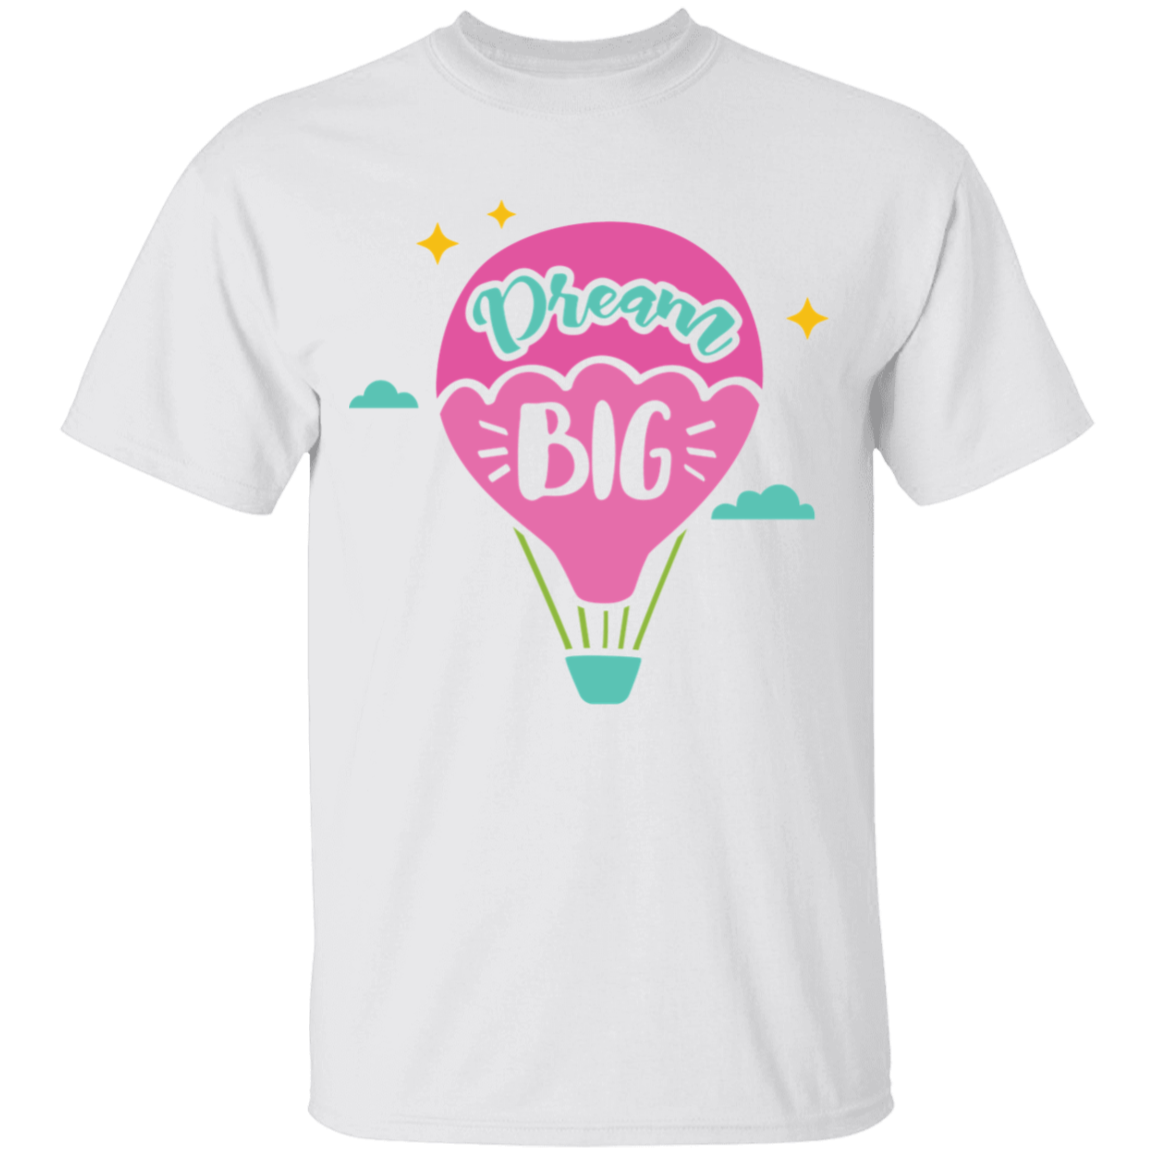 Dream Big Youth Cotton T-Shirt